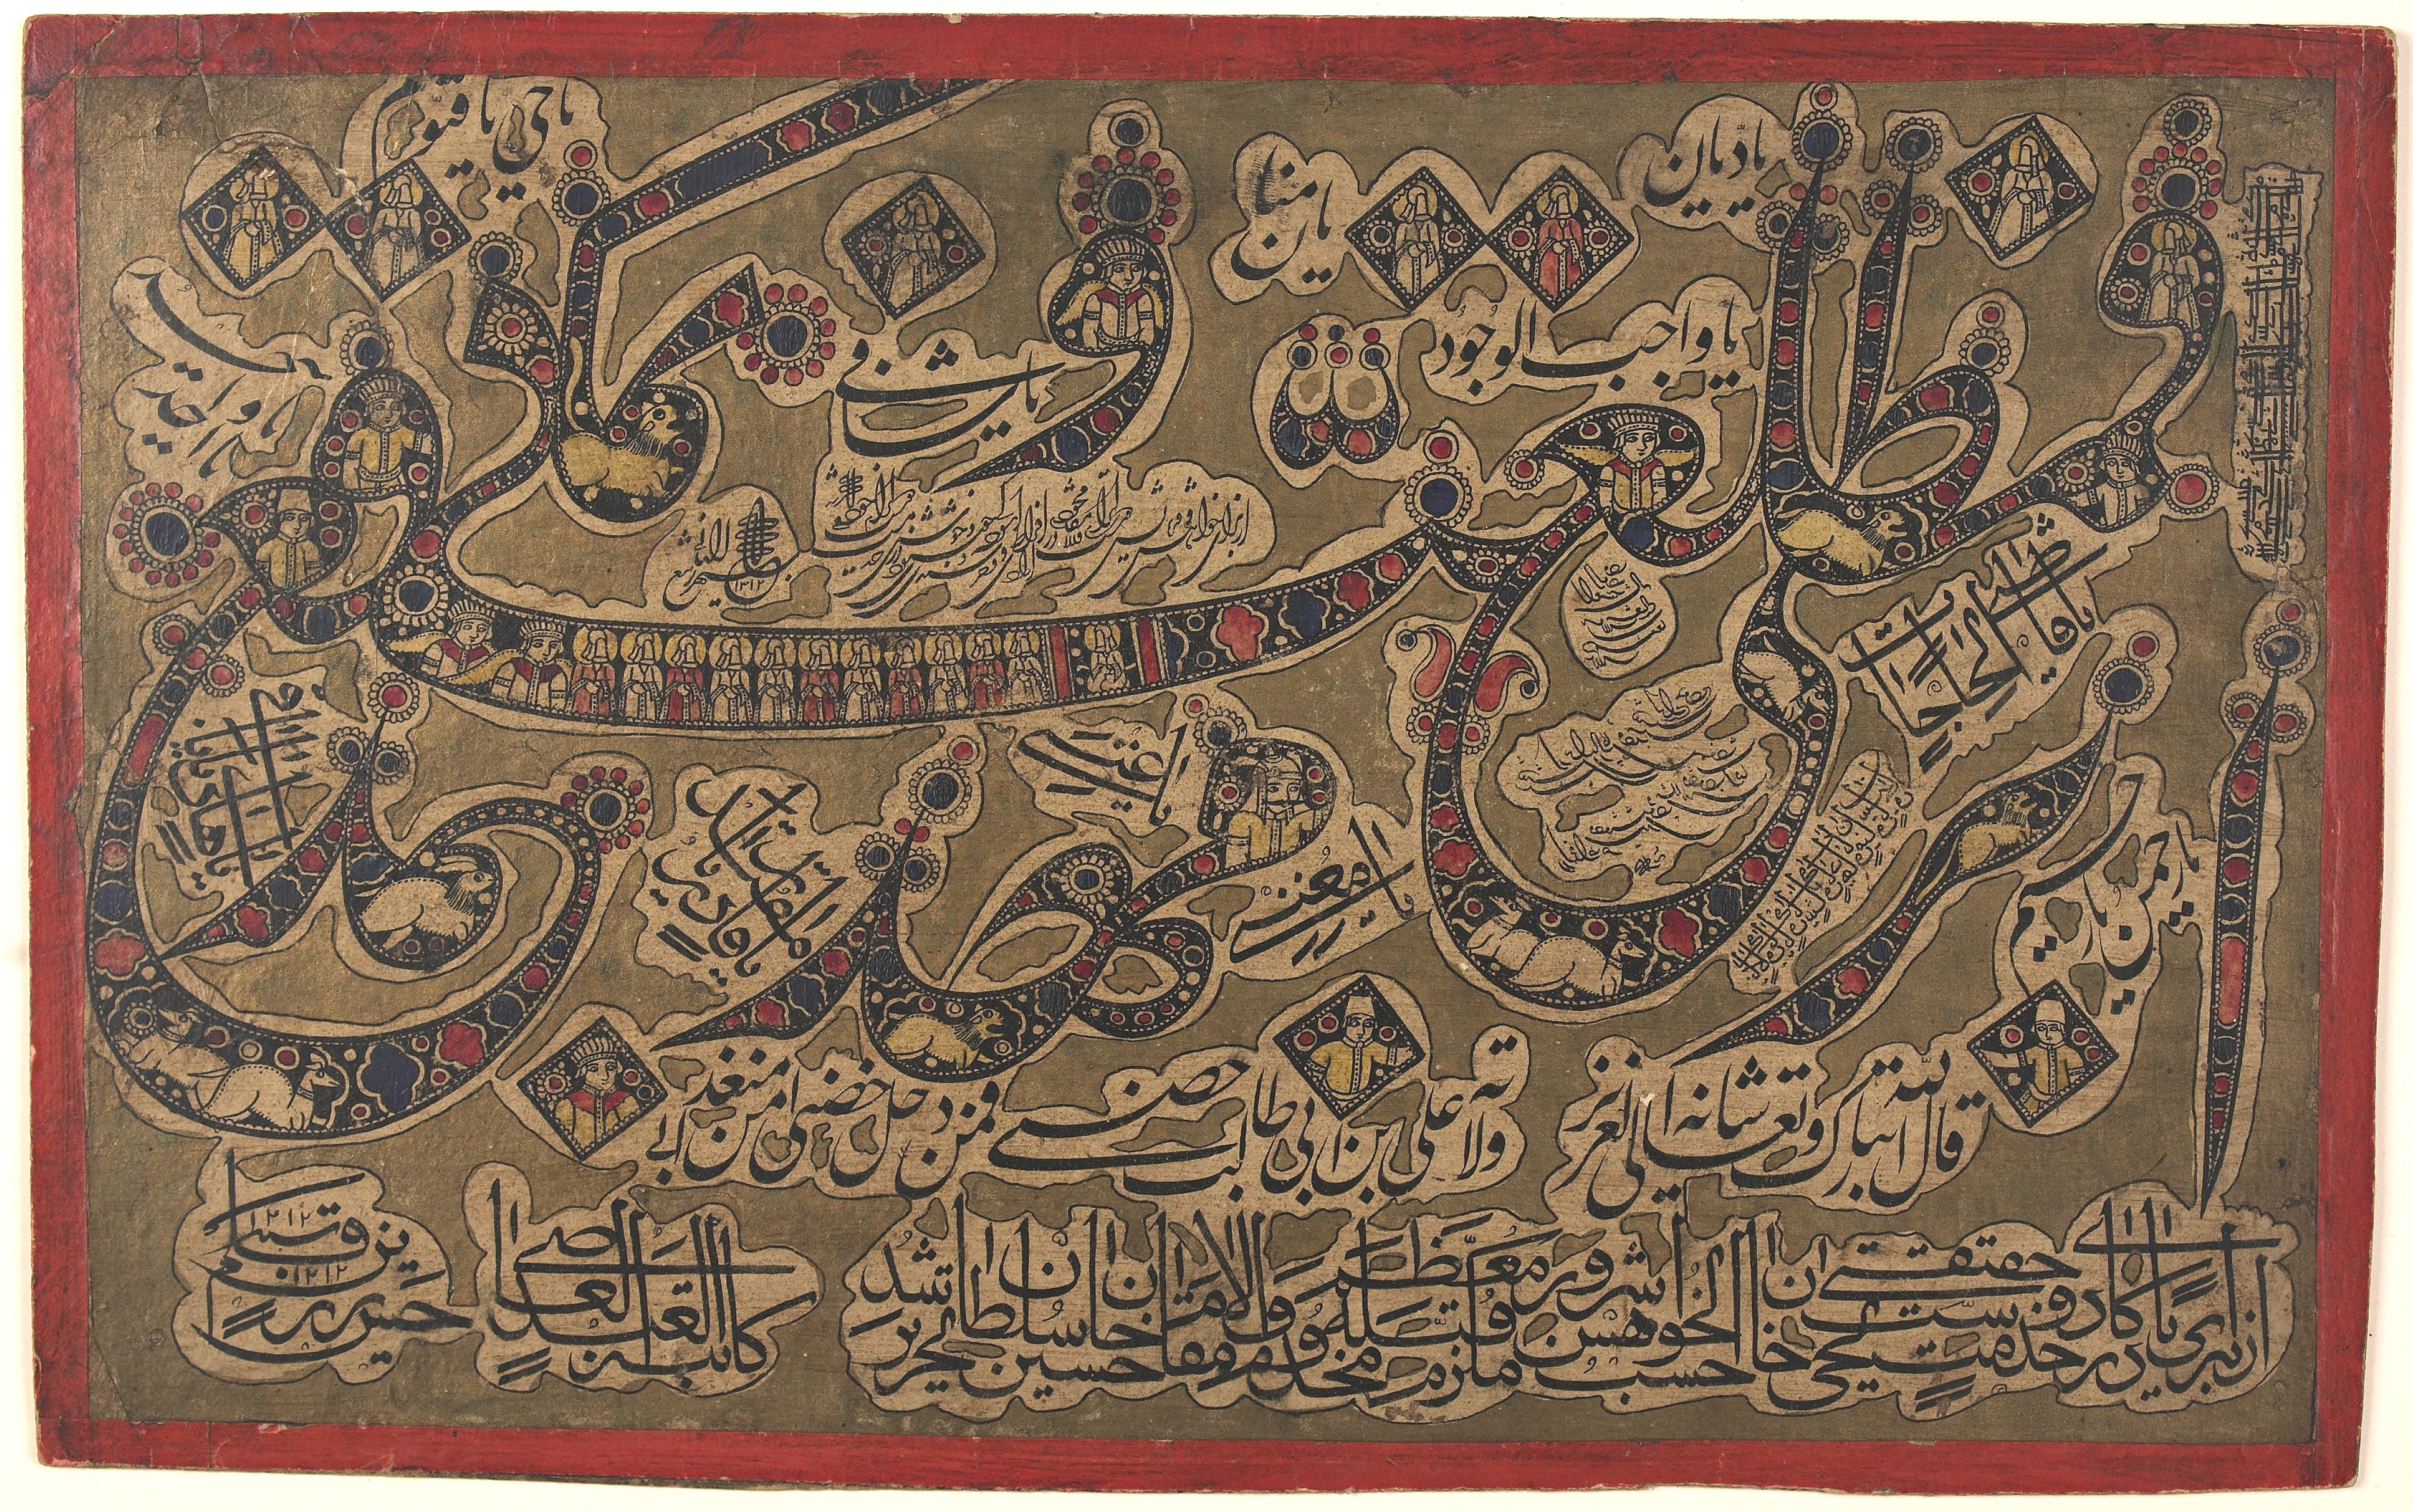 Gulzar calligraphic panel (Gulzar script)